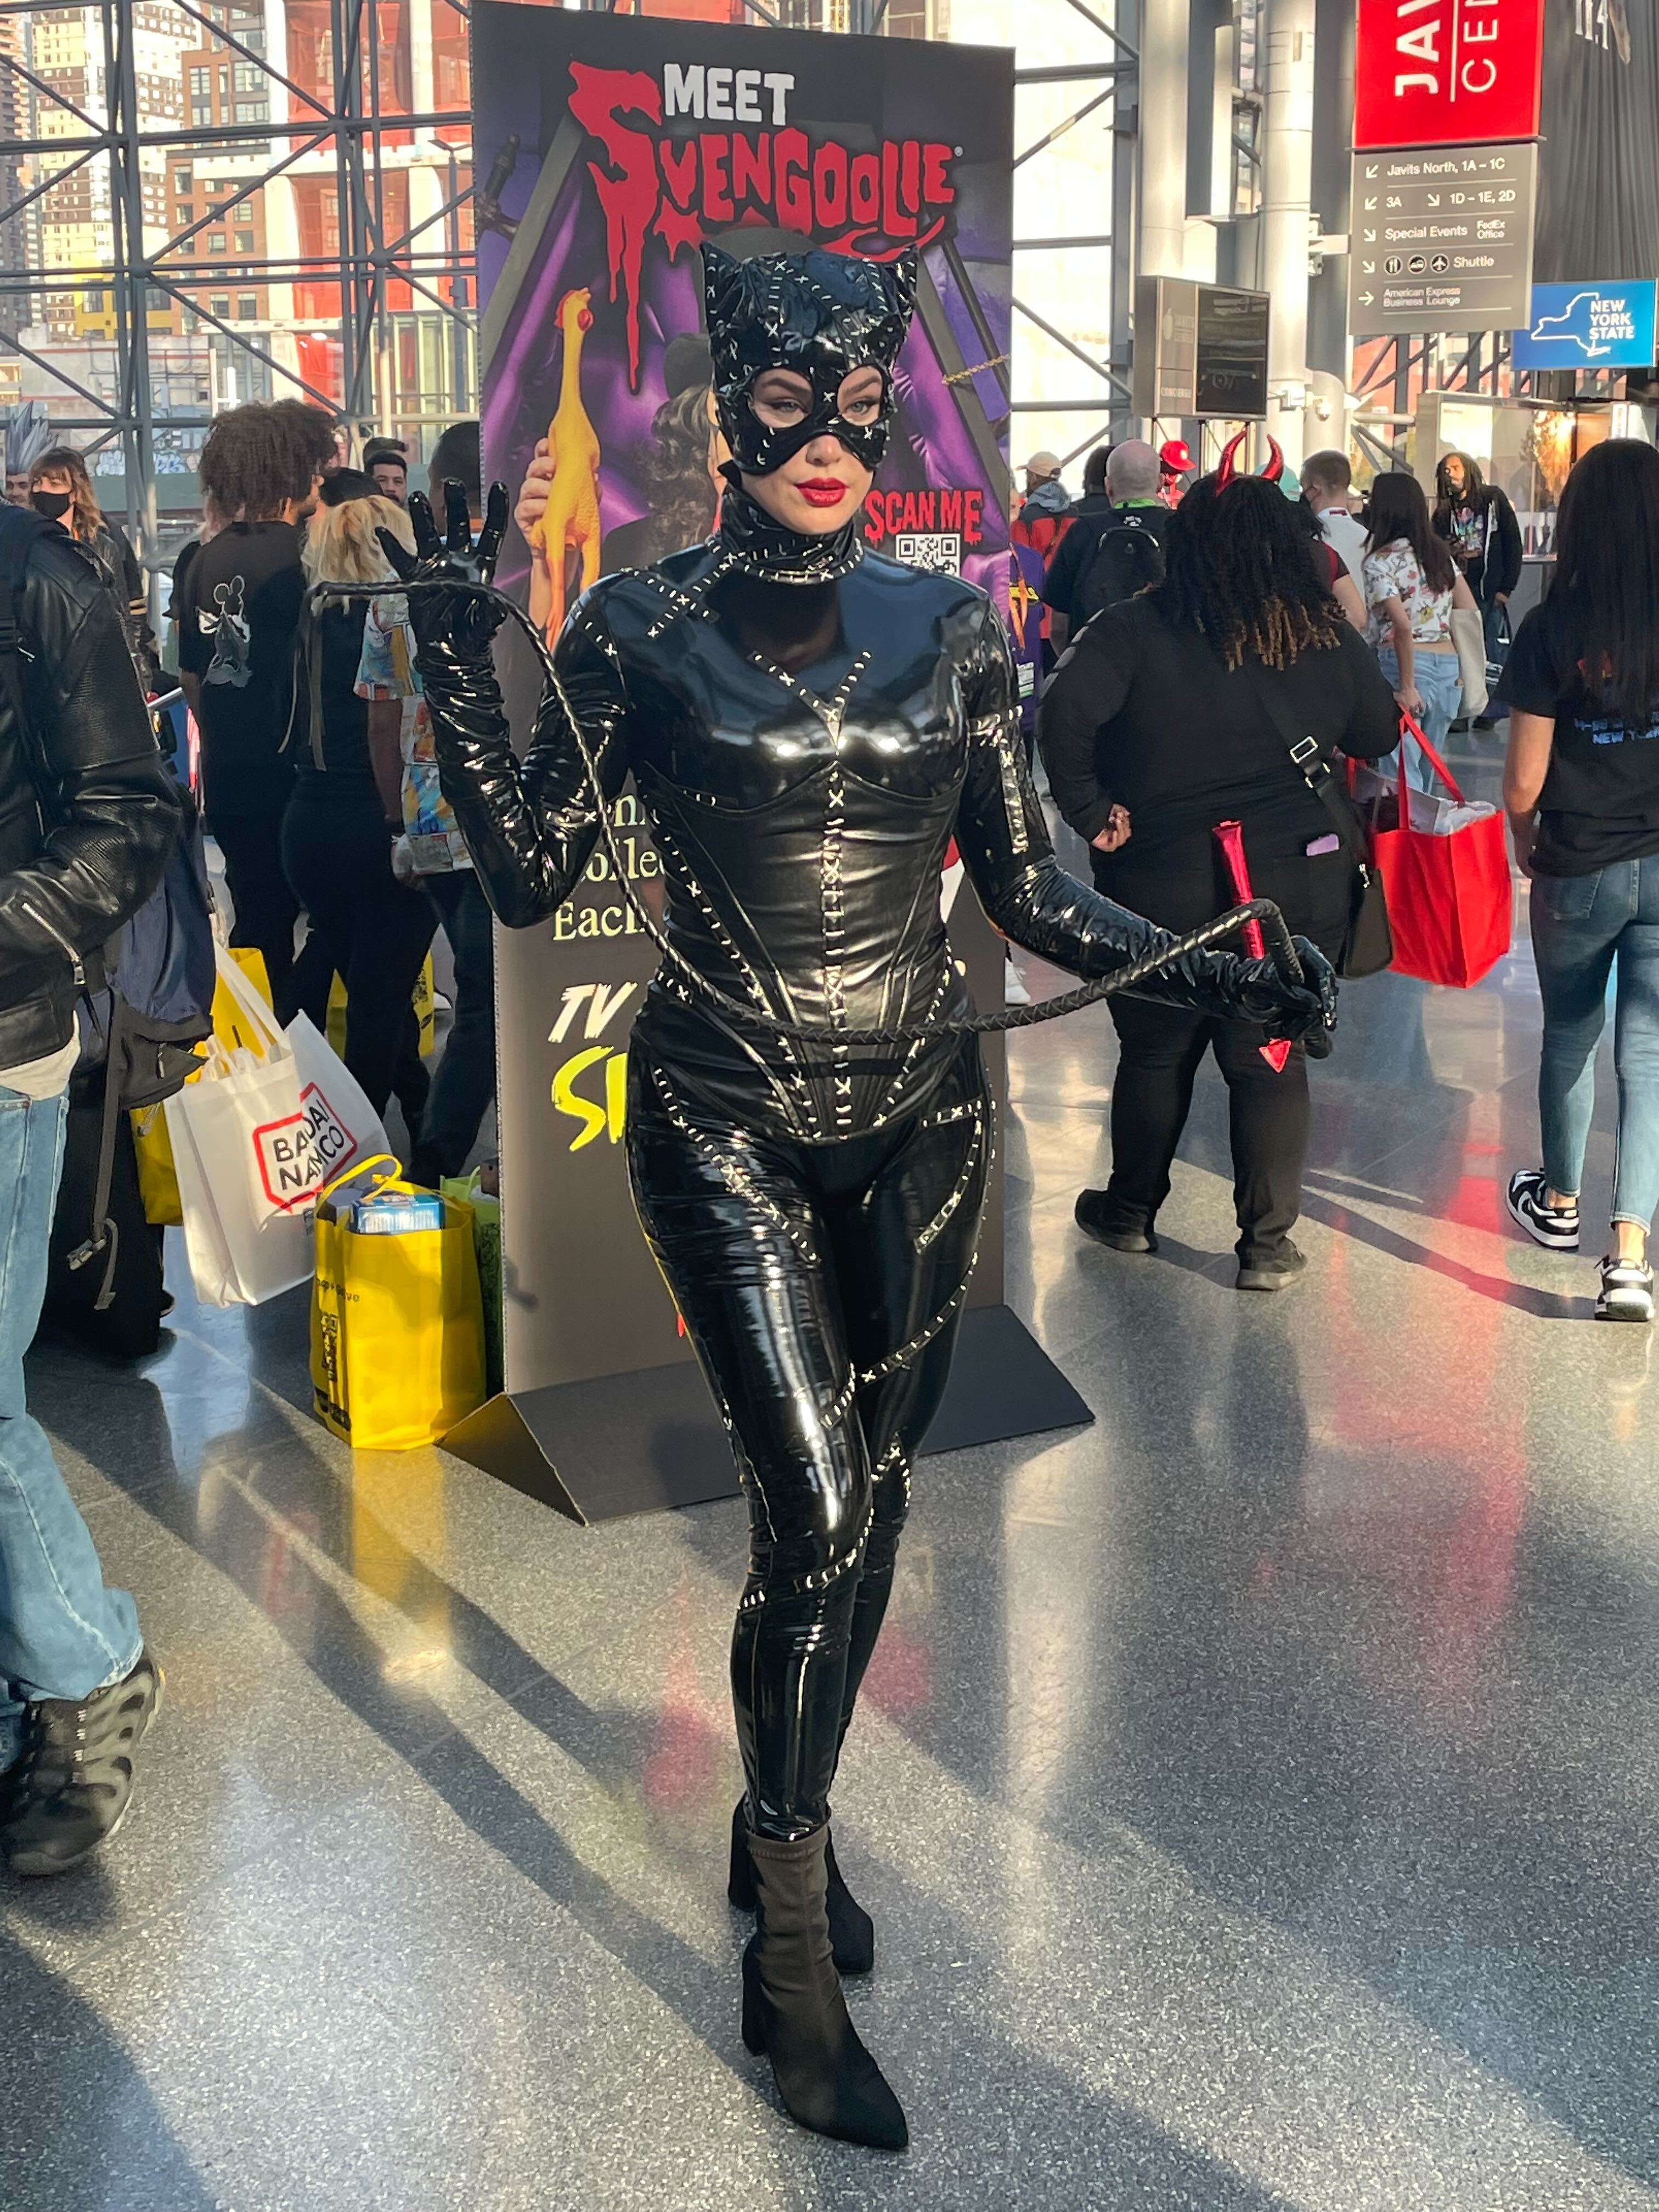 New York Comic Con Cosplay - cosplay - 153 0 alle faci Tv Si Meet Vengoole Jay